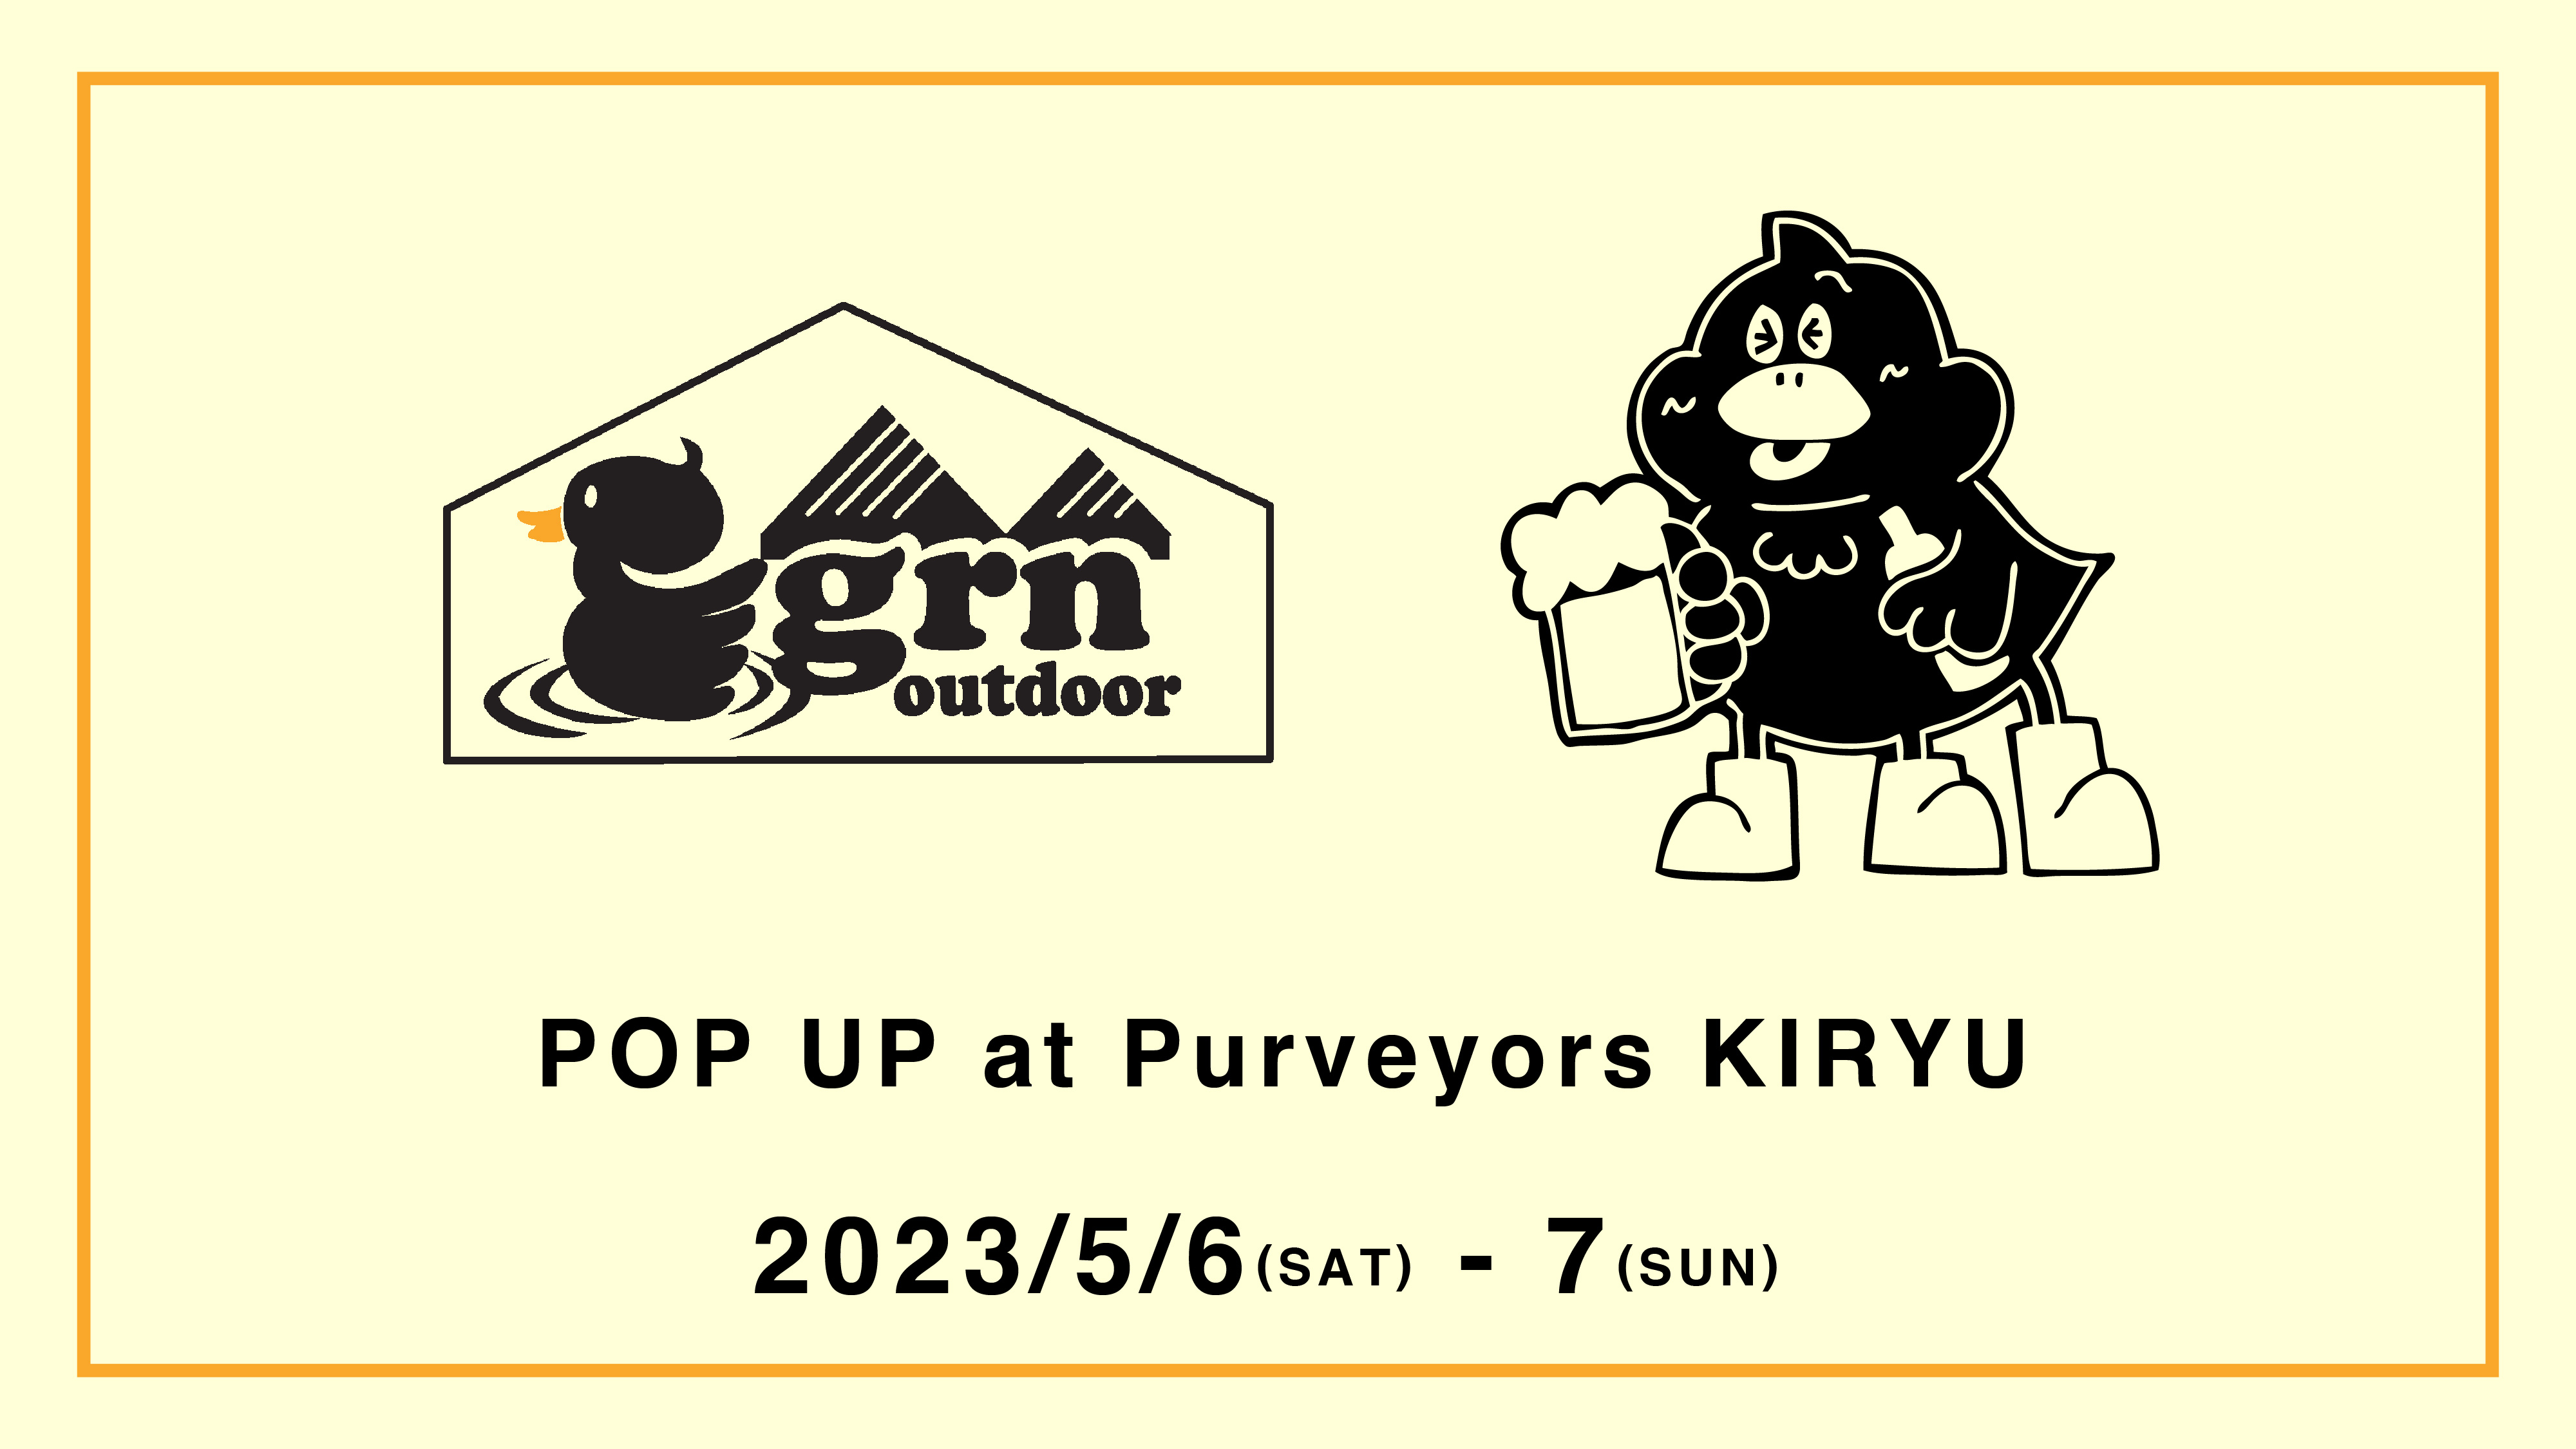 5/6-7 grn outdoor POP UP at Purveyors KIRYU HQ